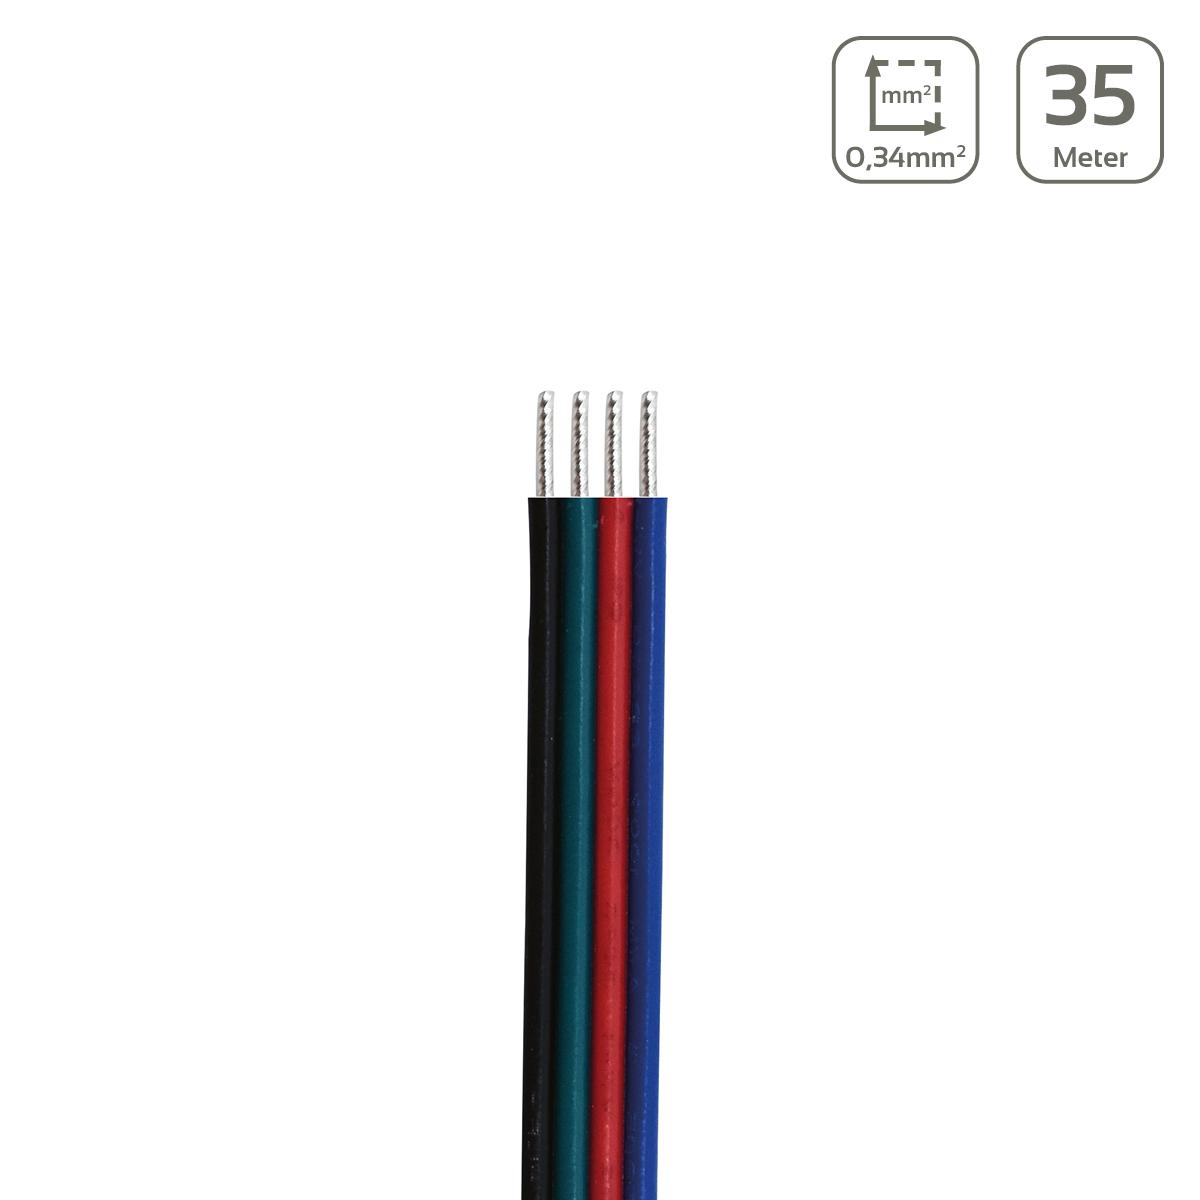 LED Kabel RGB 4-polig - Querschnitt: 4x0,34mm² / AWG22 - Länge: 35m